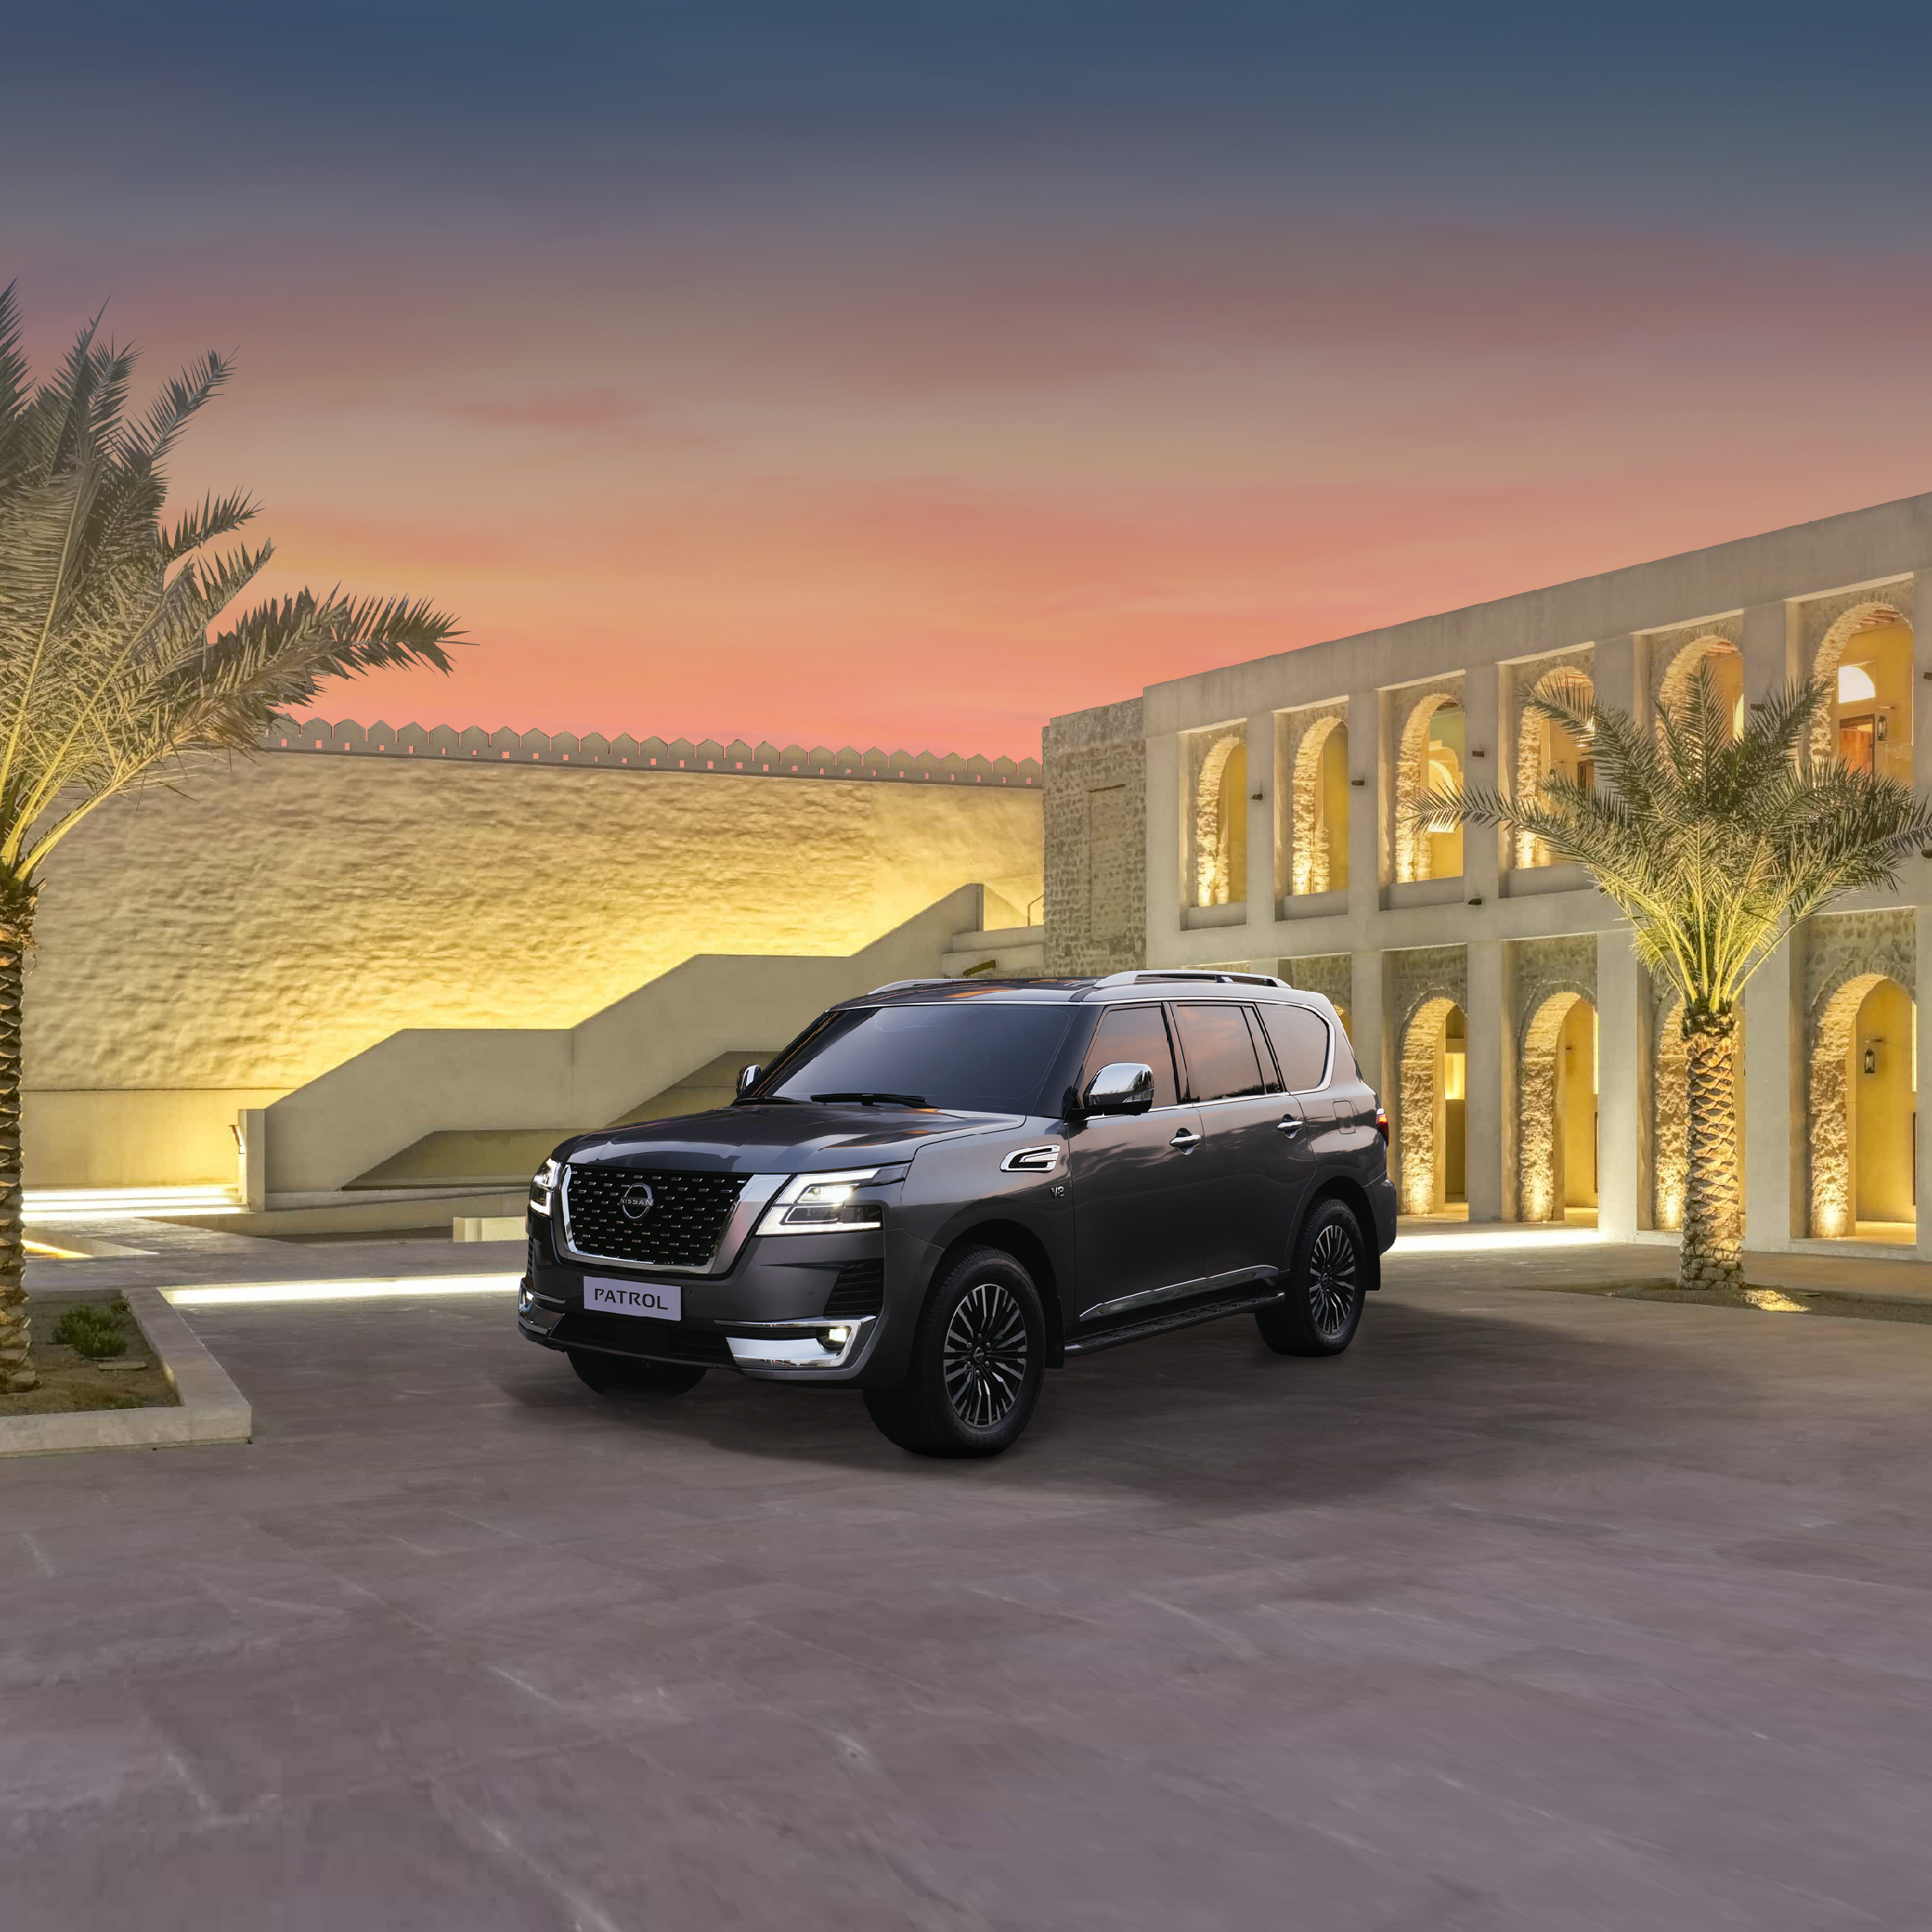 Al Masaood Automobiles Offers Exclusive Promotion on Nissan Patrol This Eid